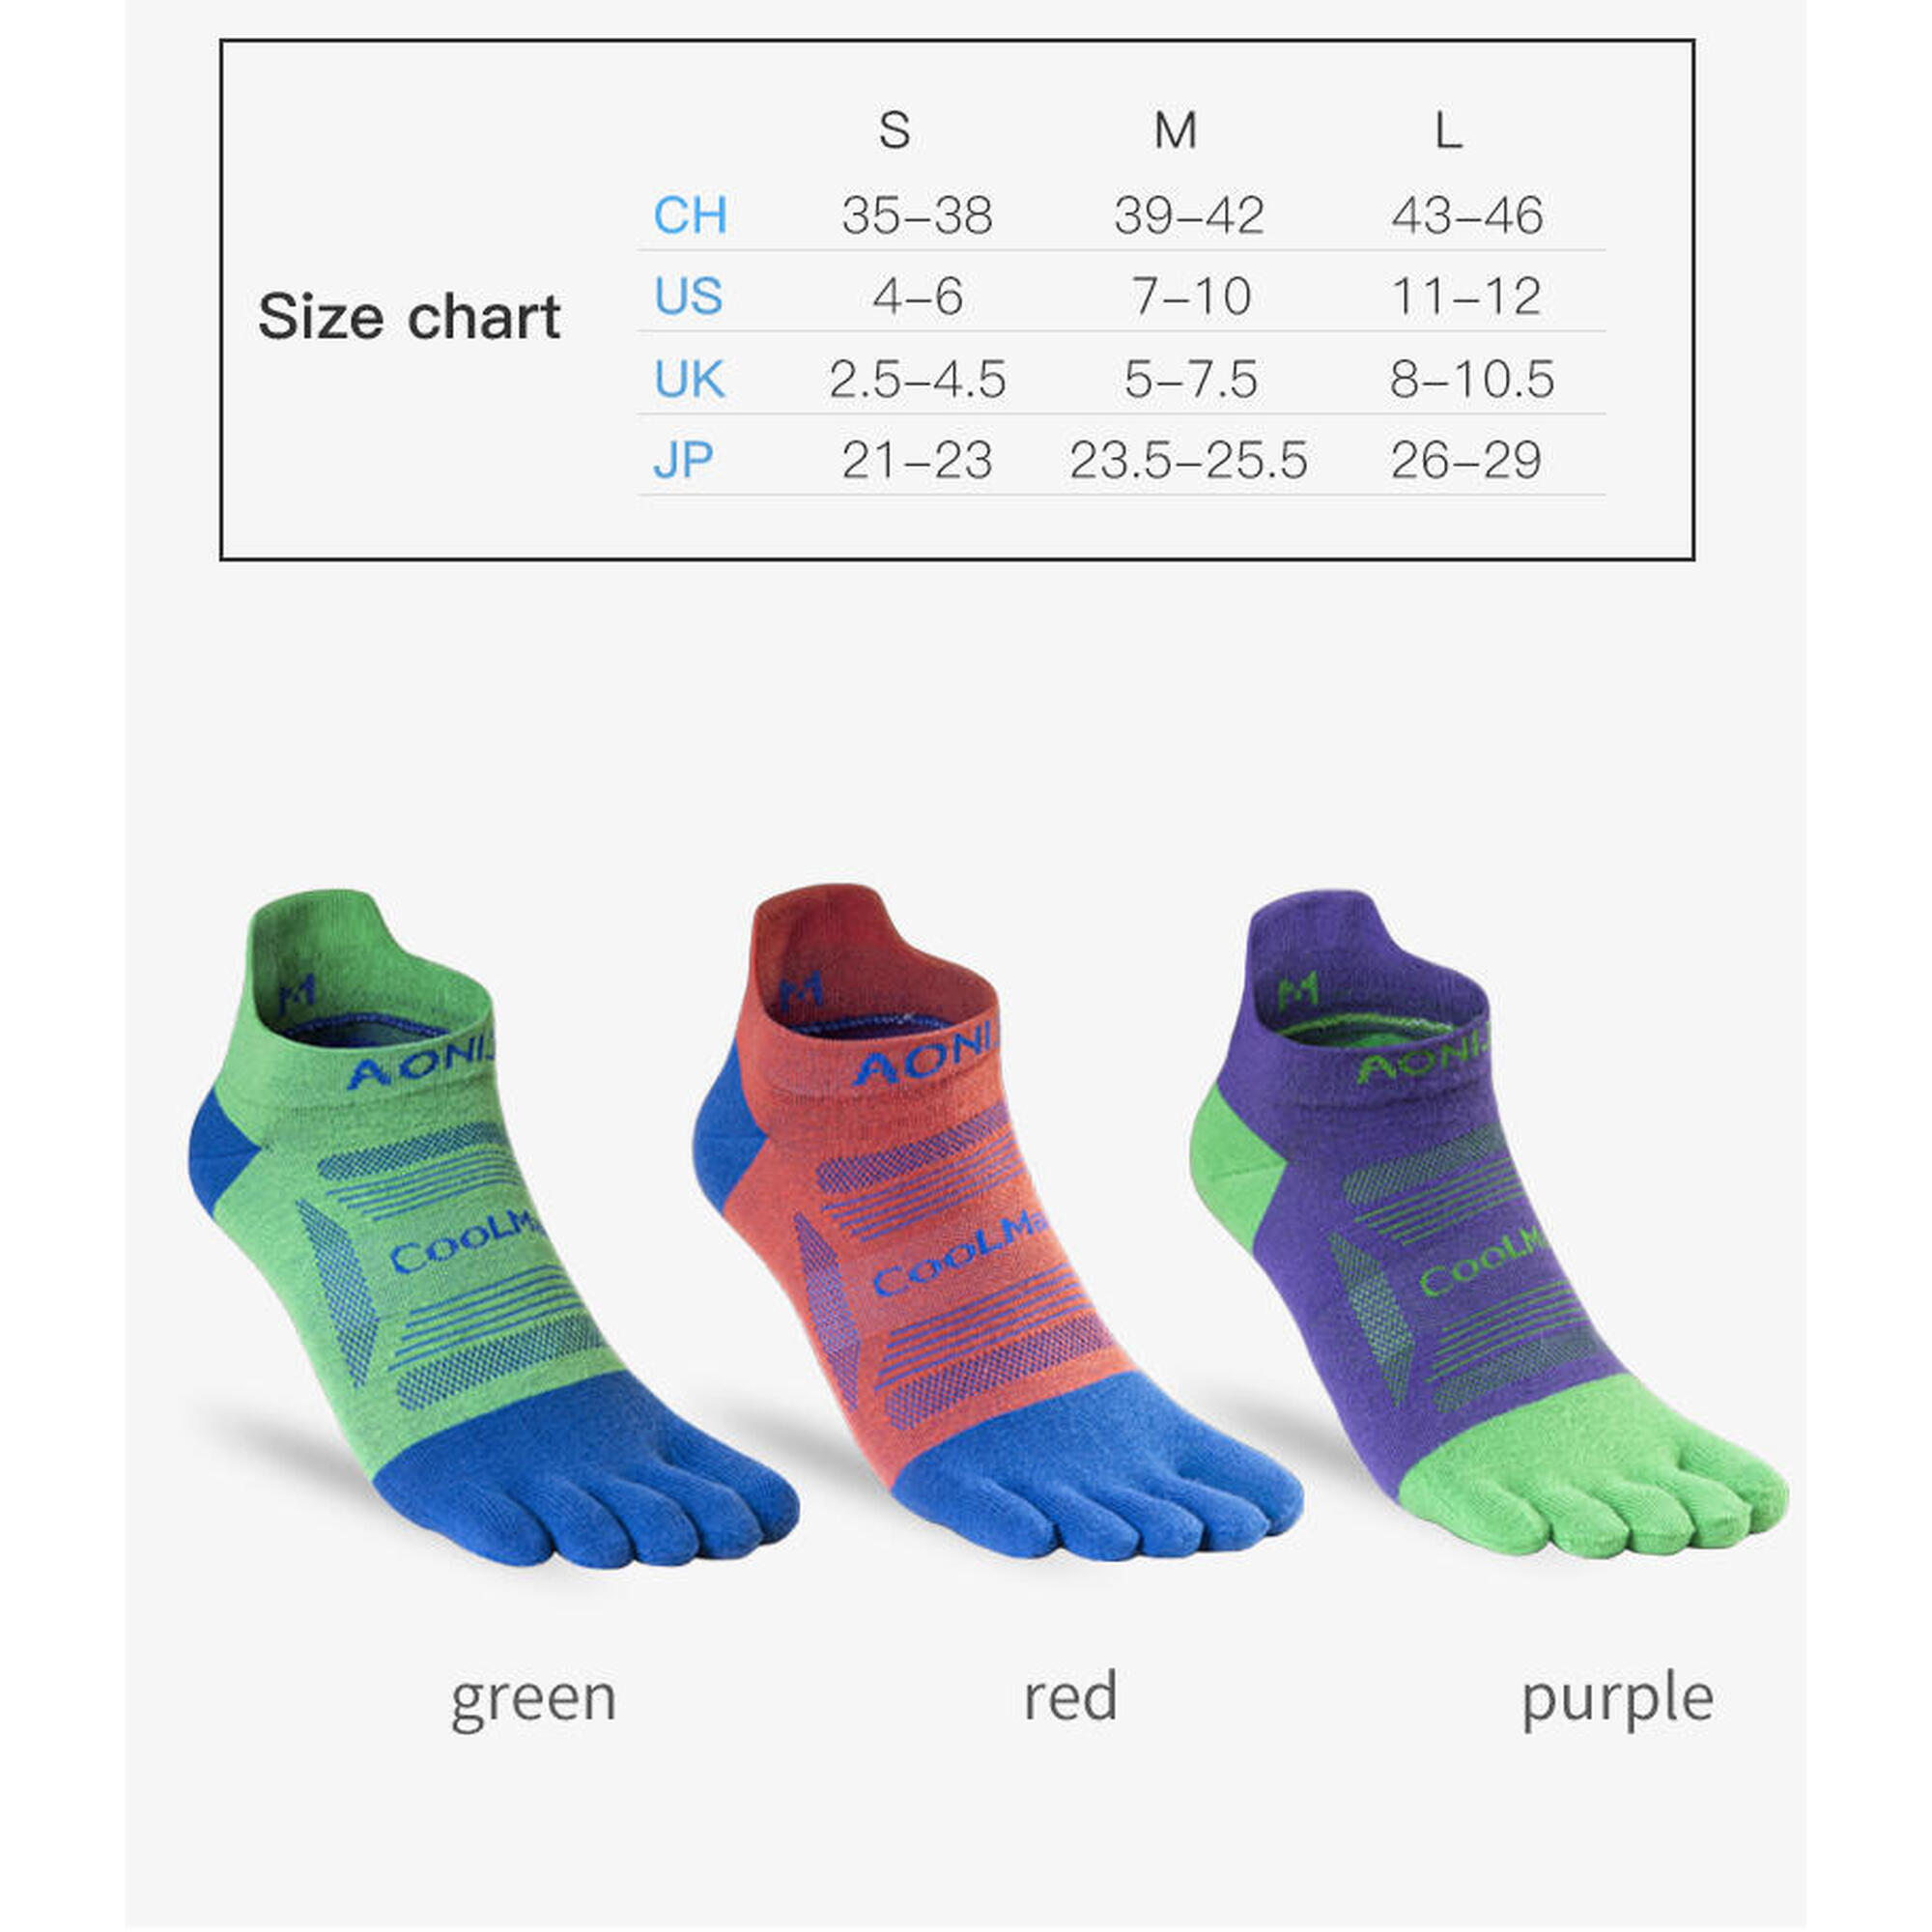 E4837 Sports Toe Socks (3 pairs set) - Mixed color